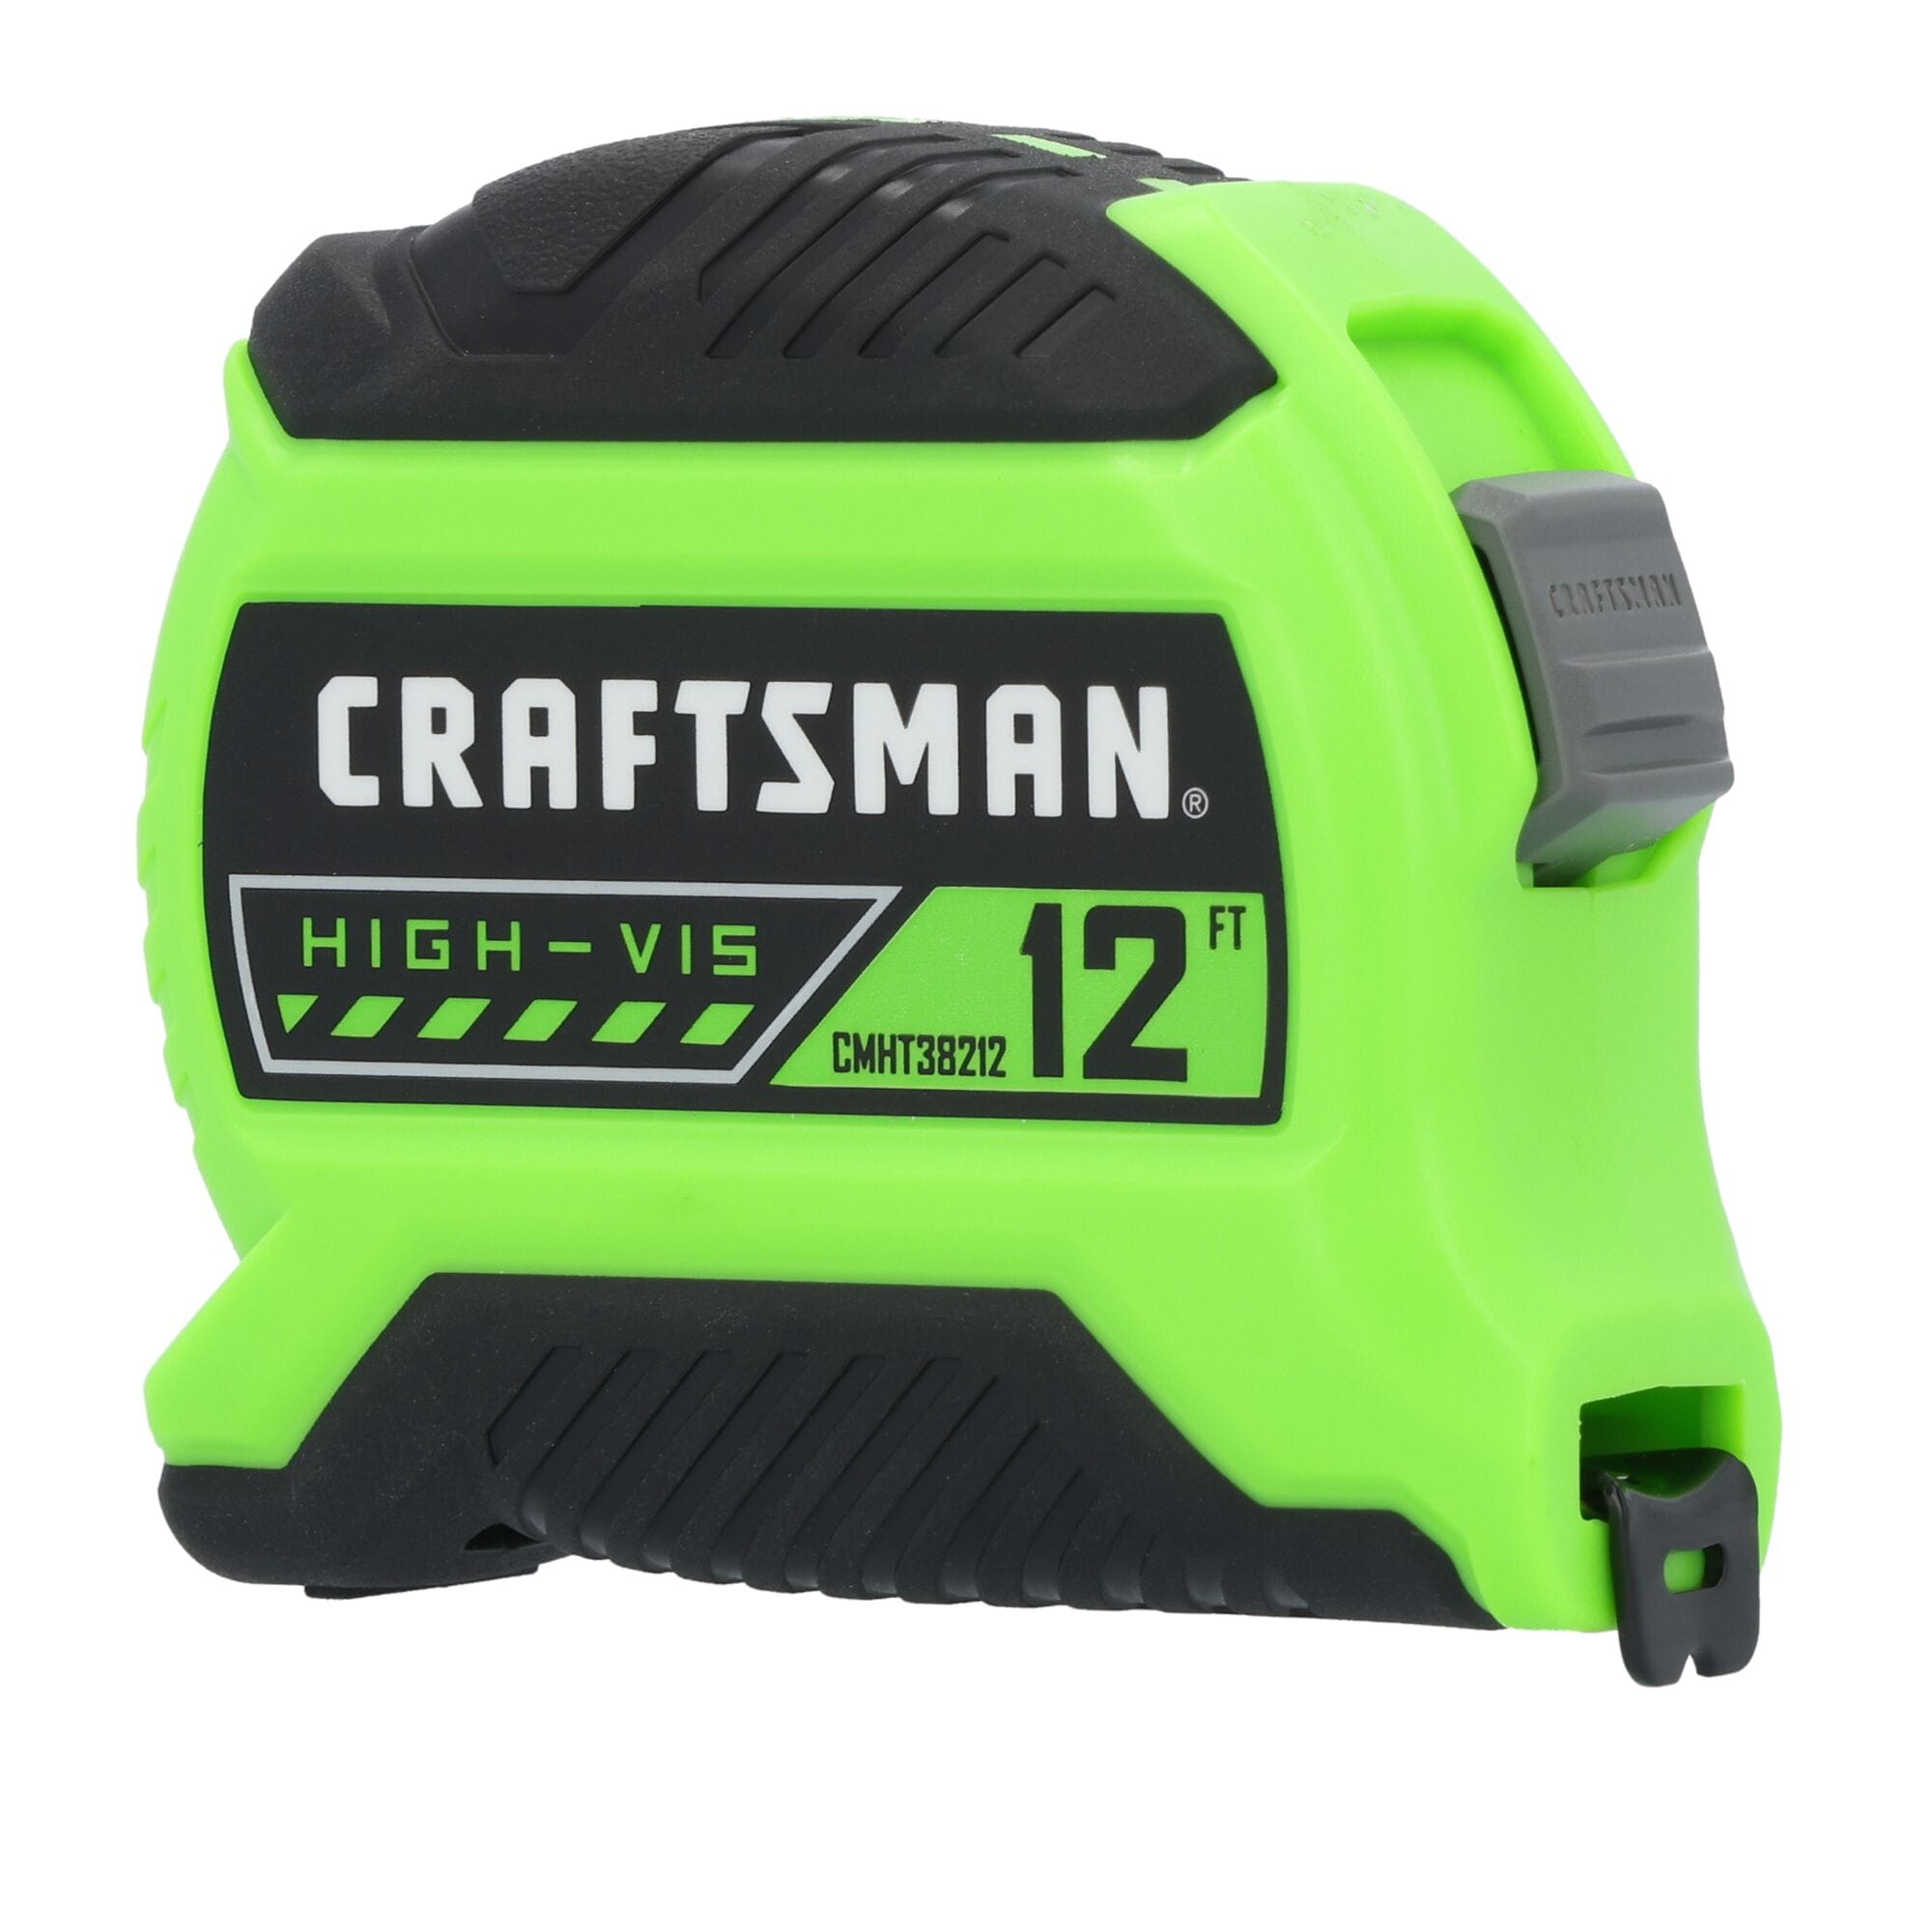 Craftsman 12 ft Hi-Vis Tape Measure